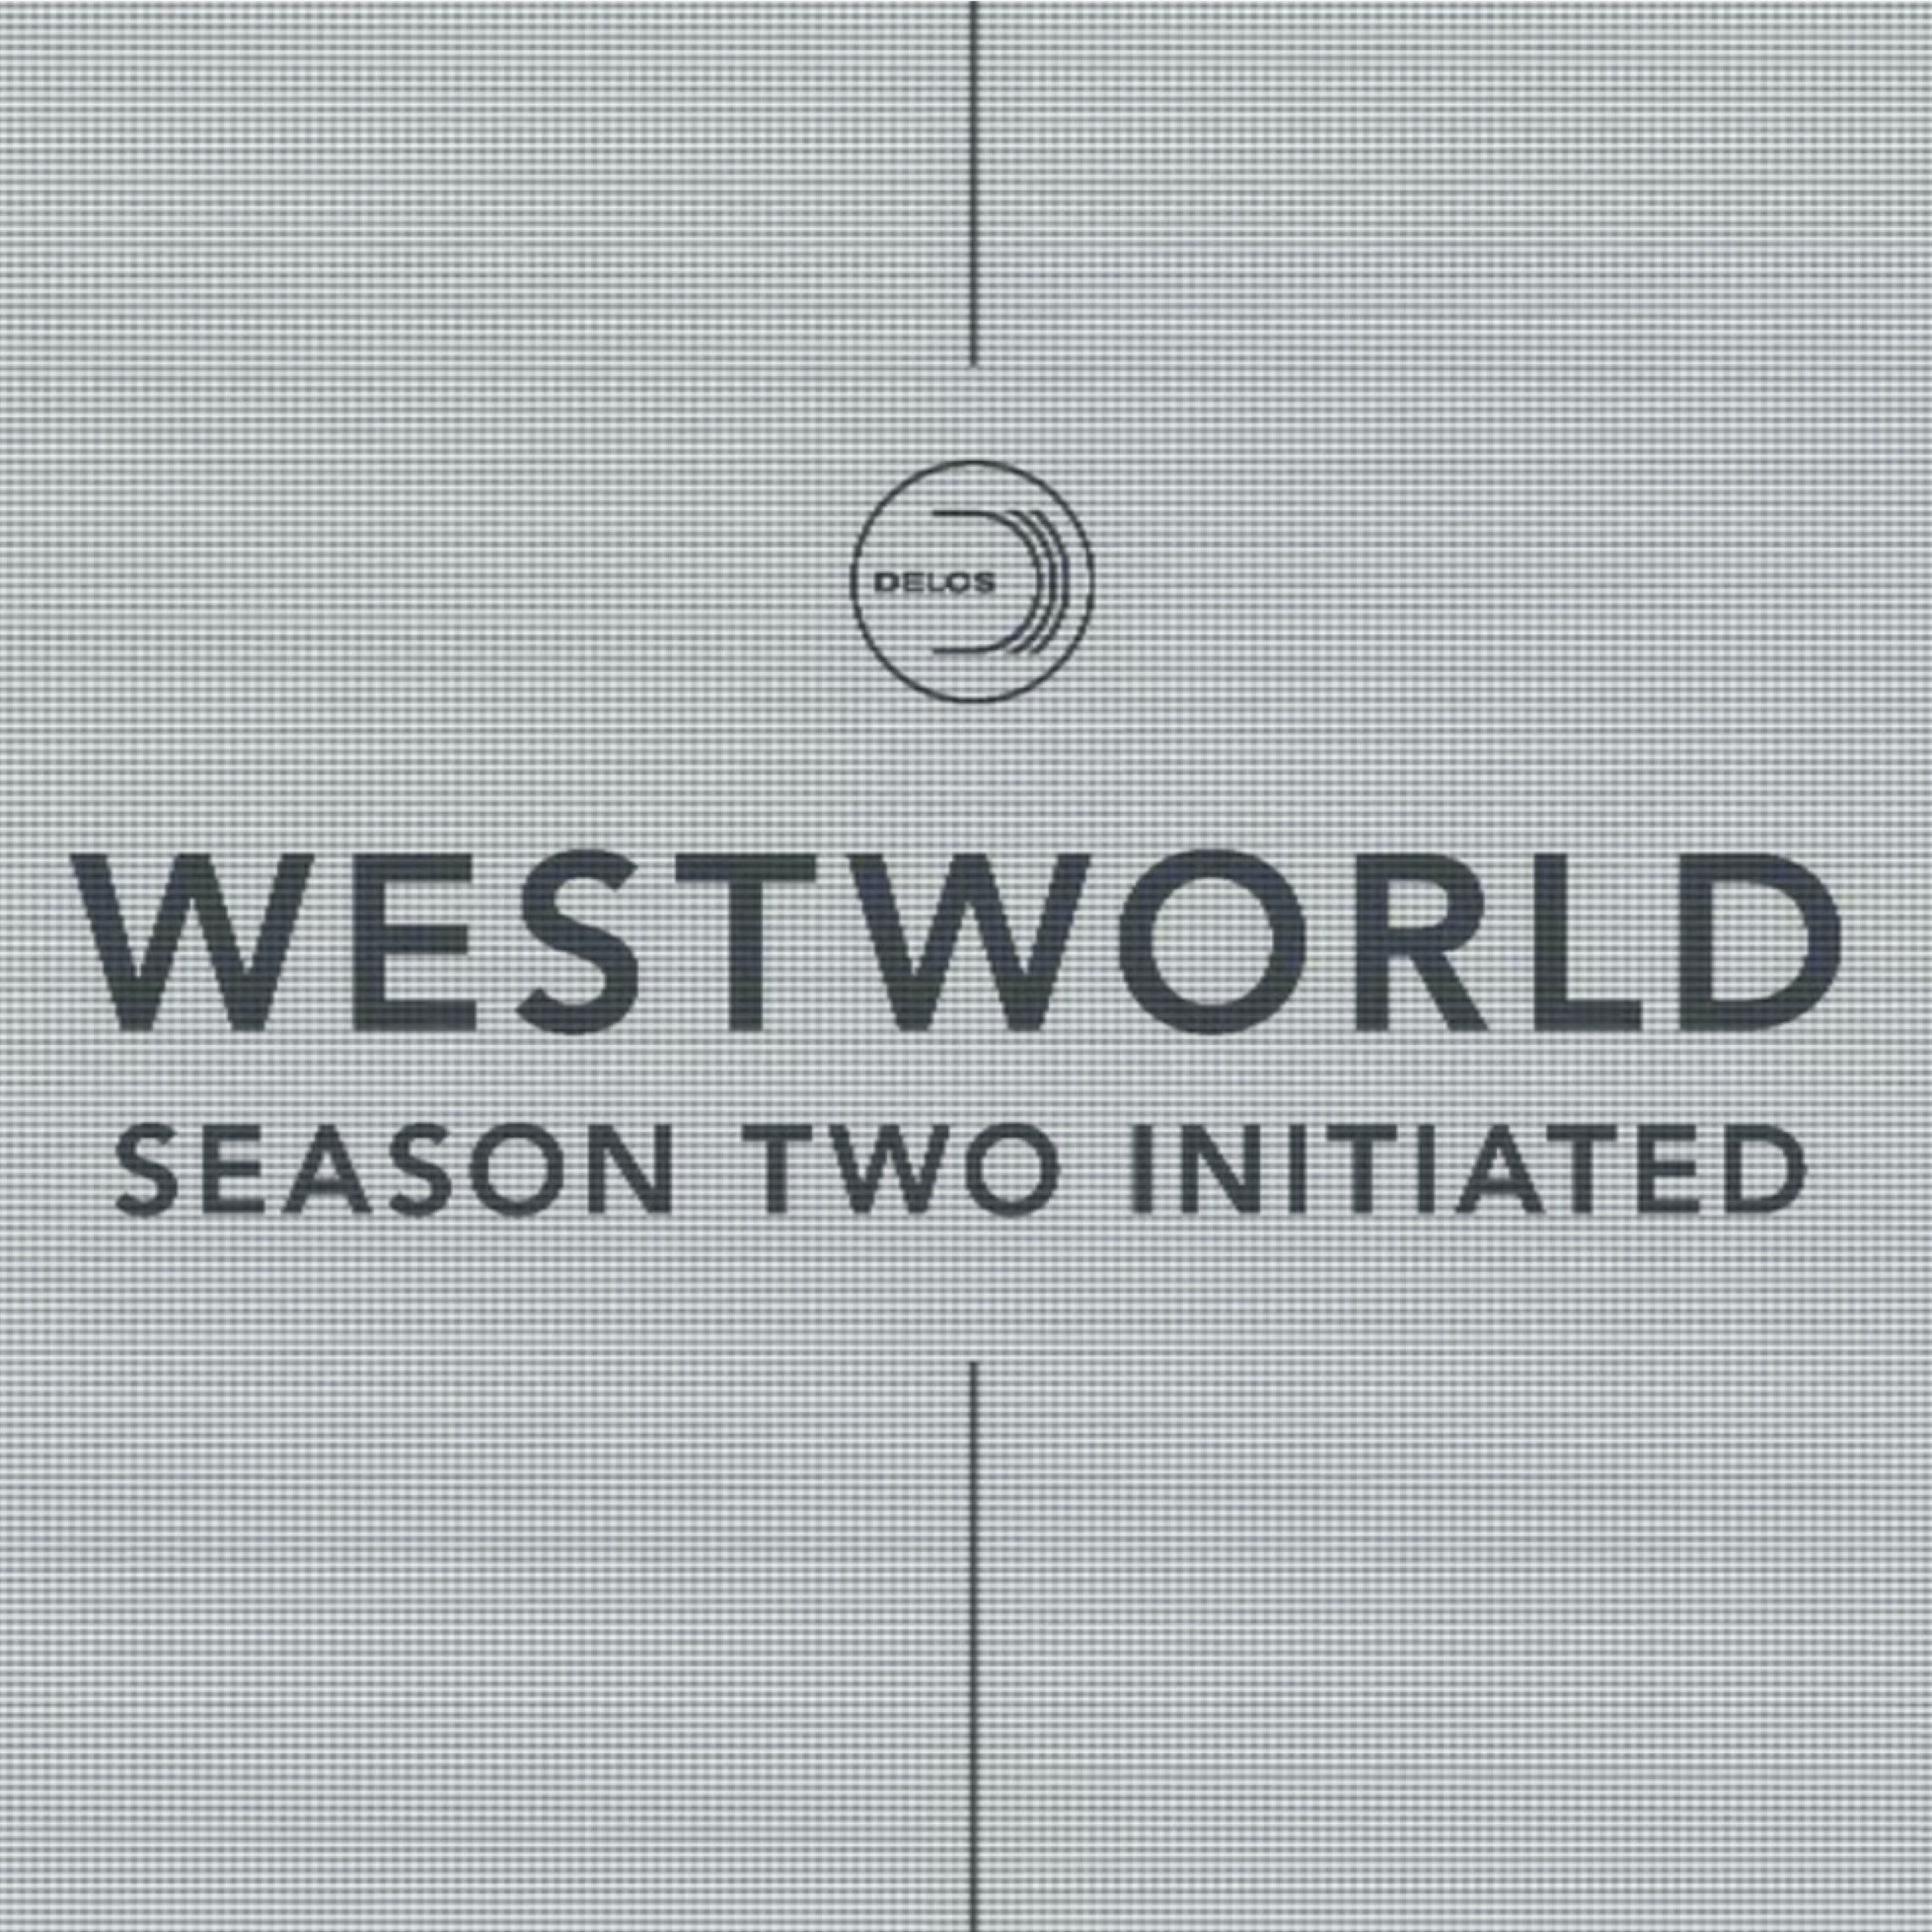 Westworld Season 2 Production Update